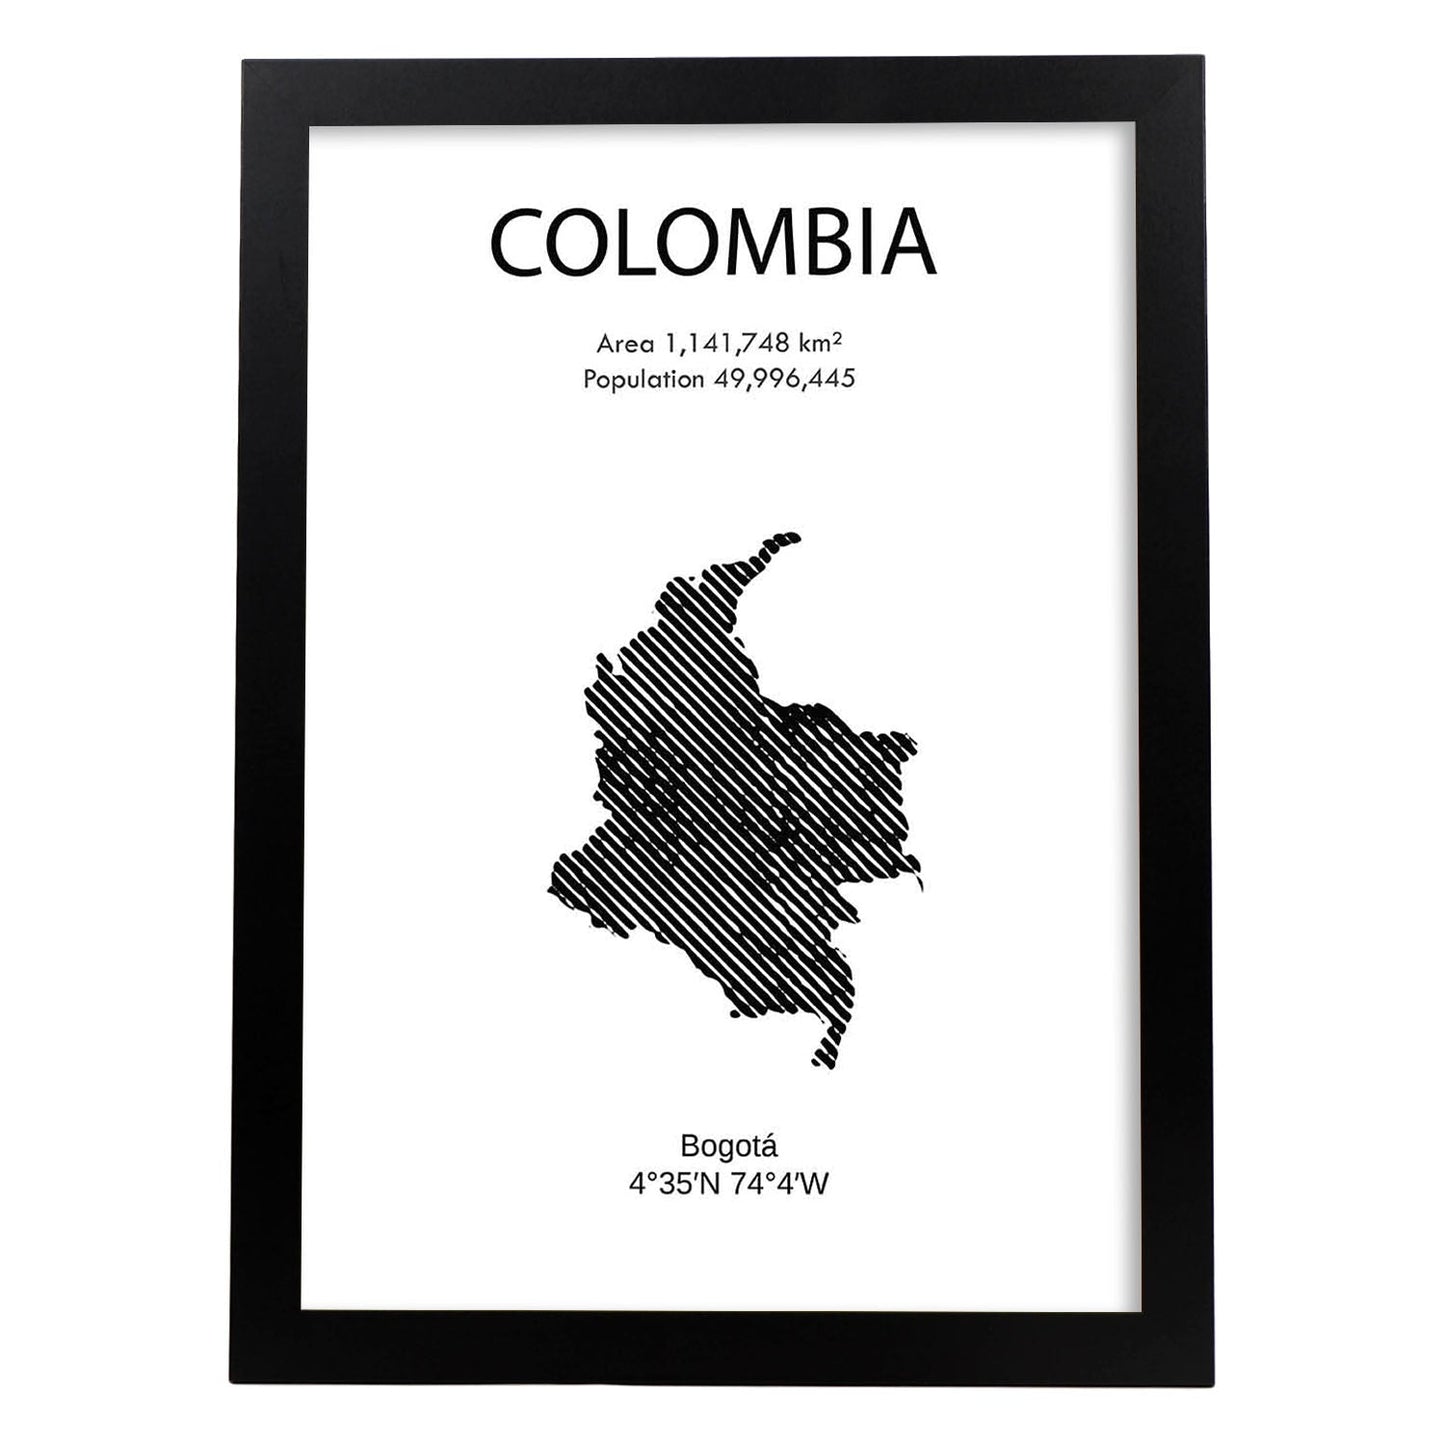 Poster de Colombia. Láminas de paises y continentes del mundo.-Artwork-Nacnic-A4-Marco Negro-Nacnic Estudio SL